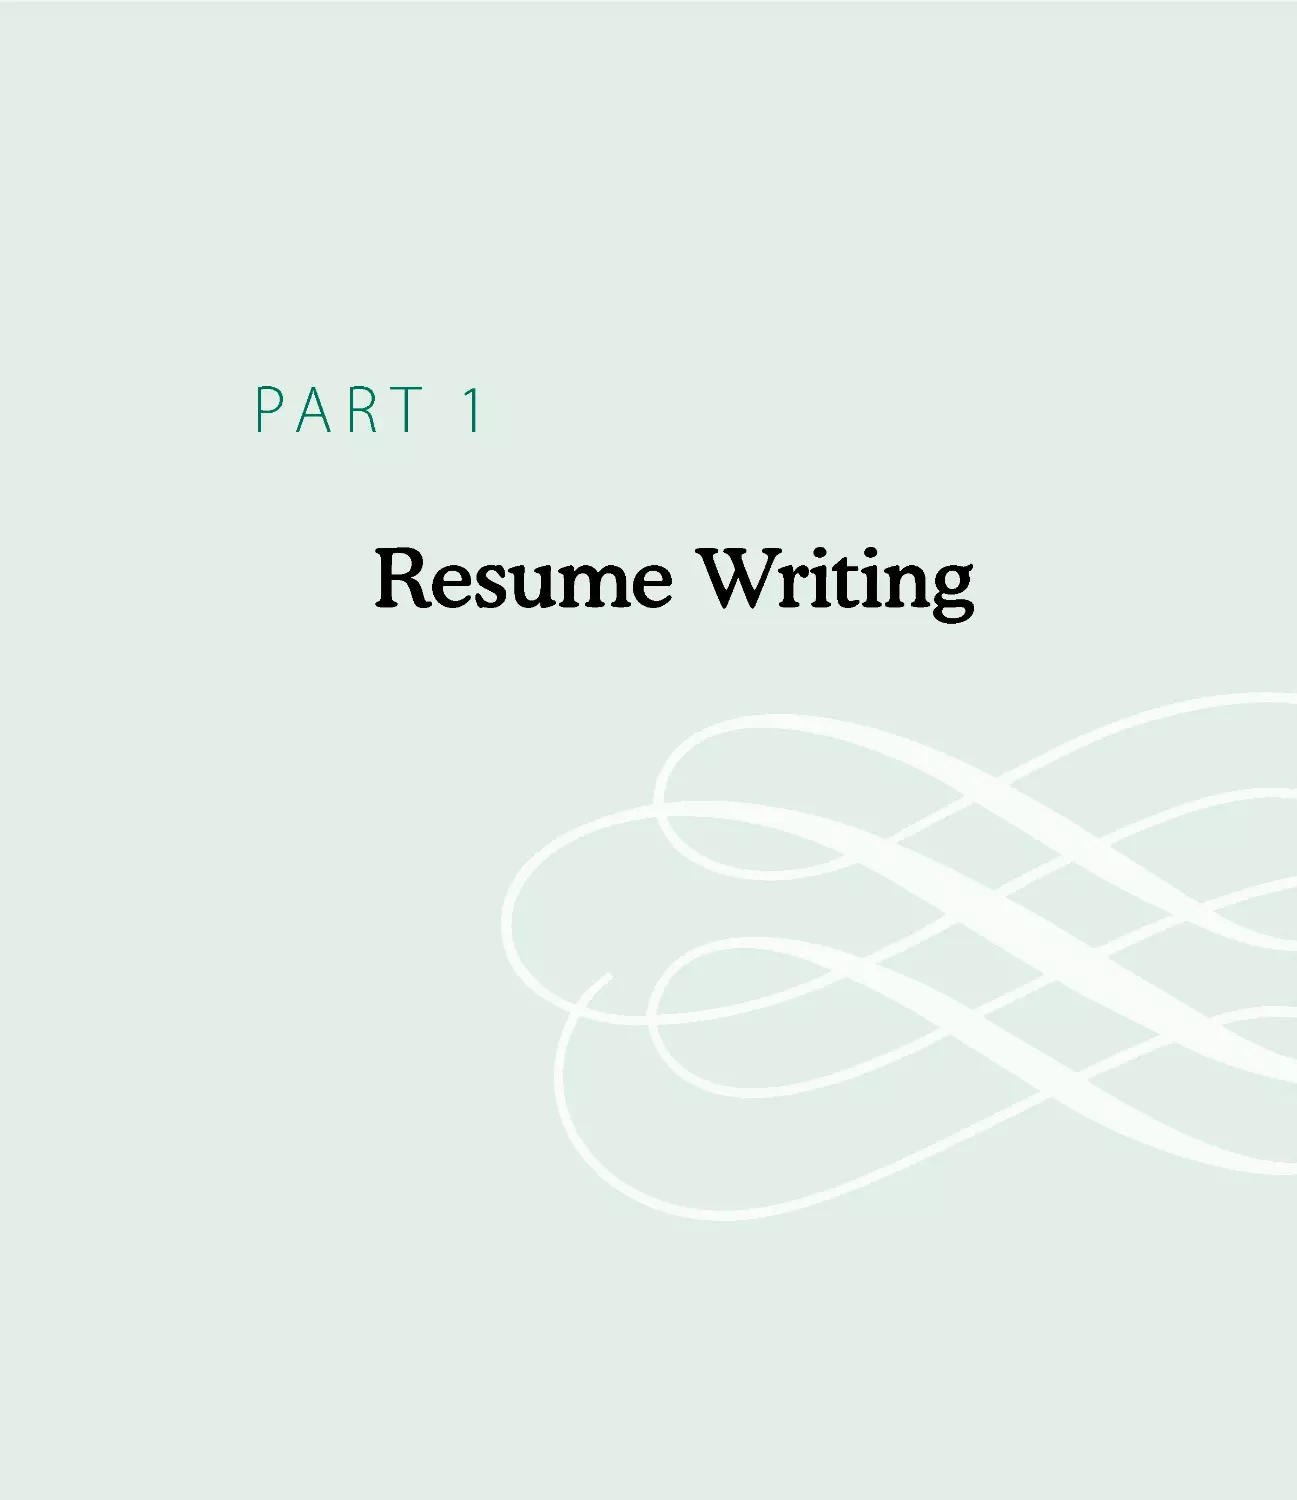 Part 1: Resume Writing